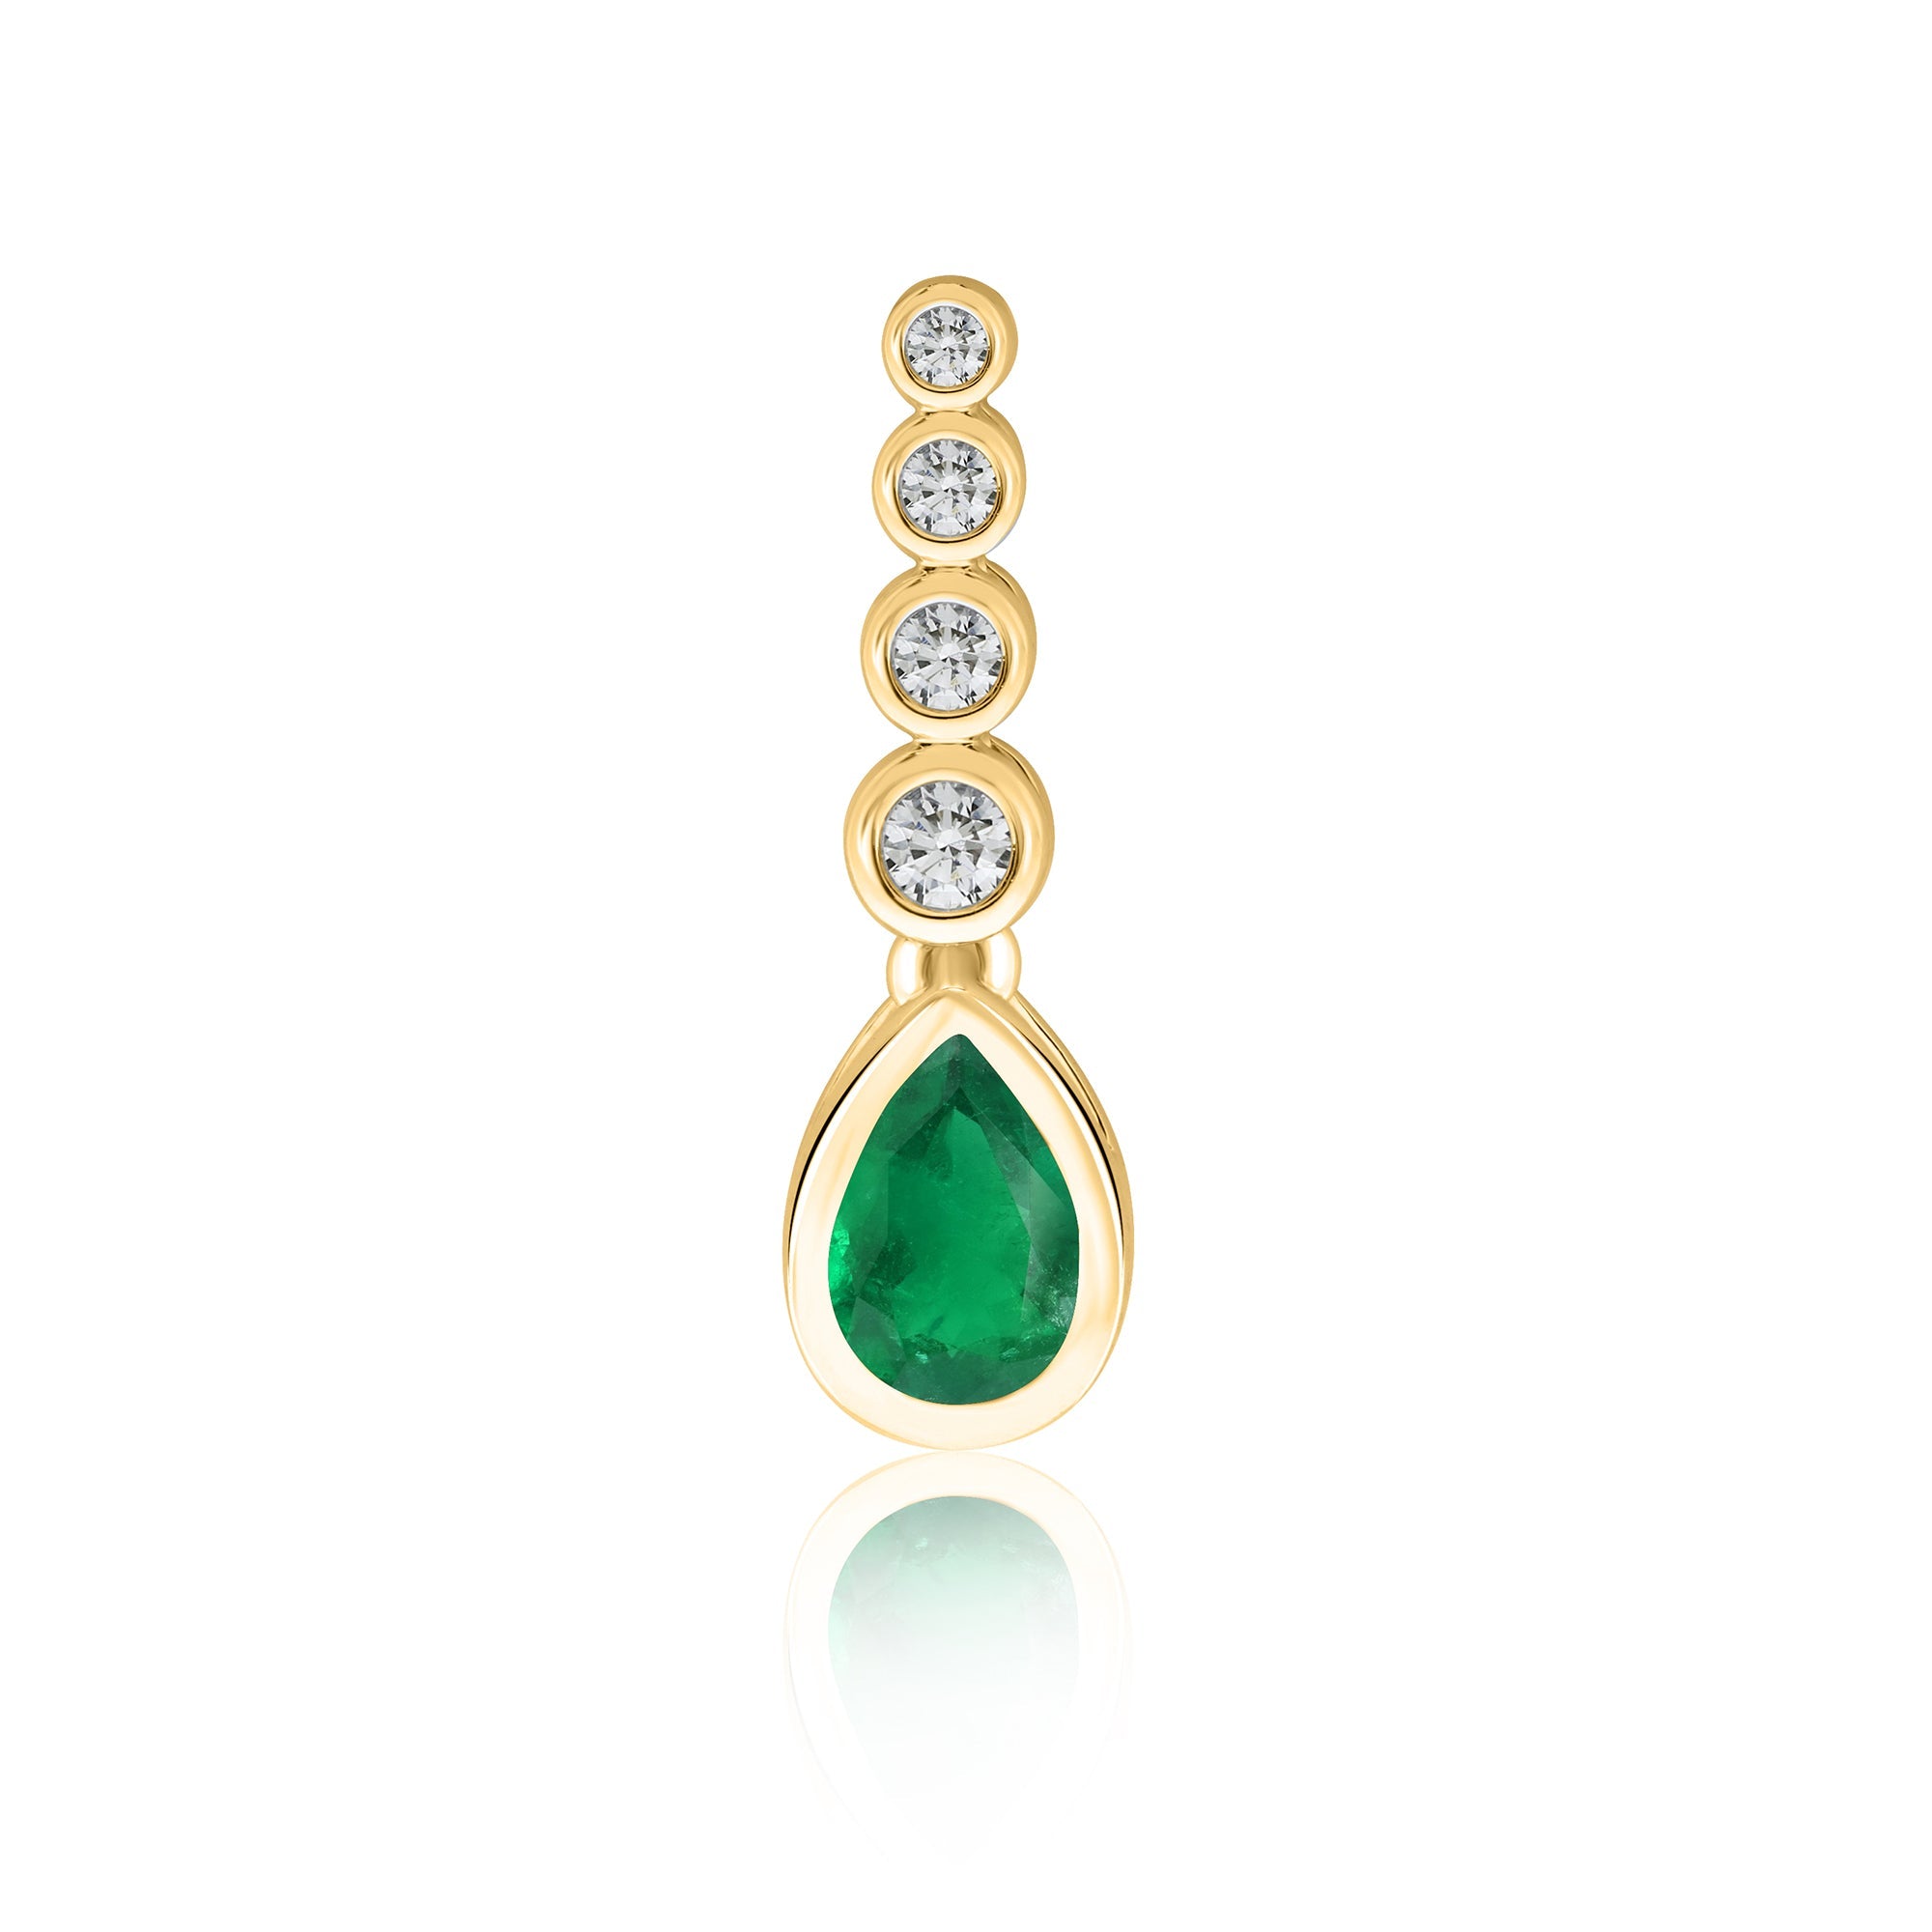 9ct gold 6x4mm pear shape emerald & diamond pendant 0.09ct